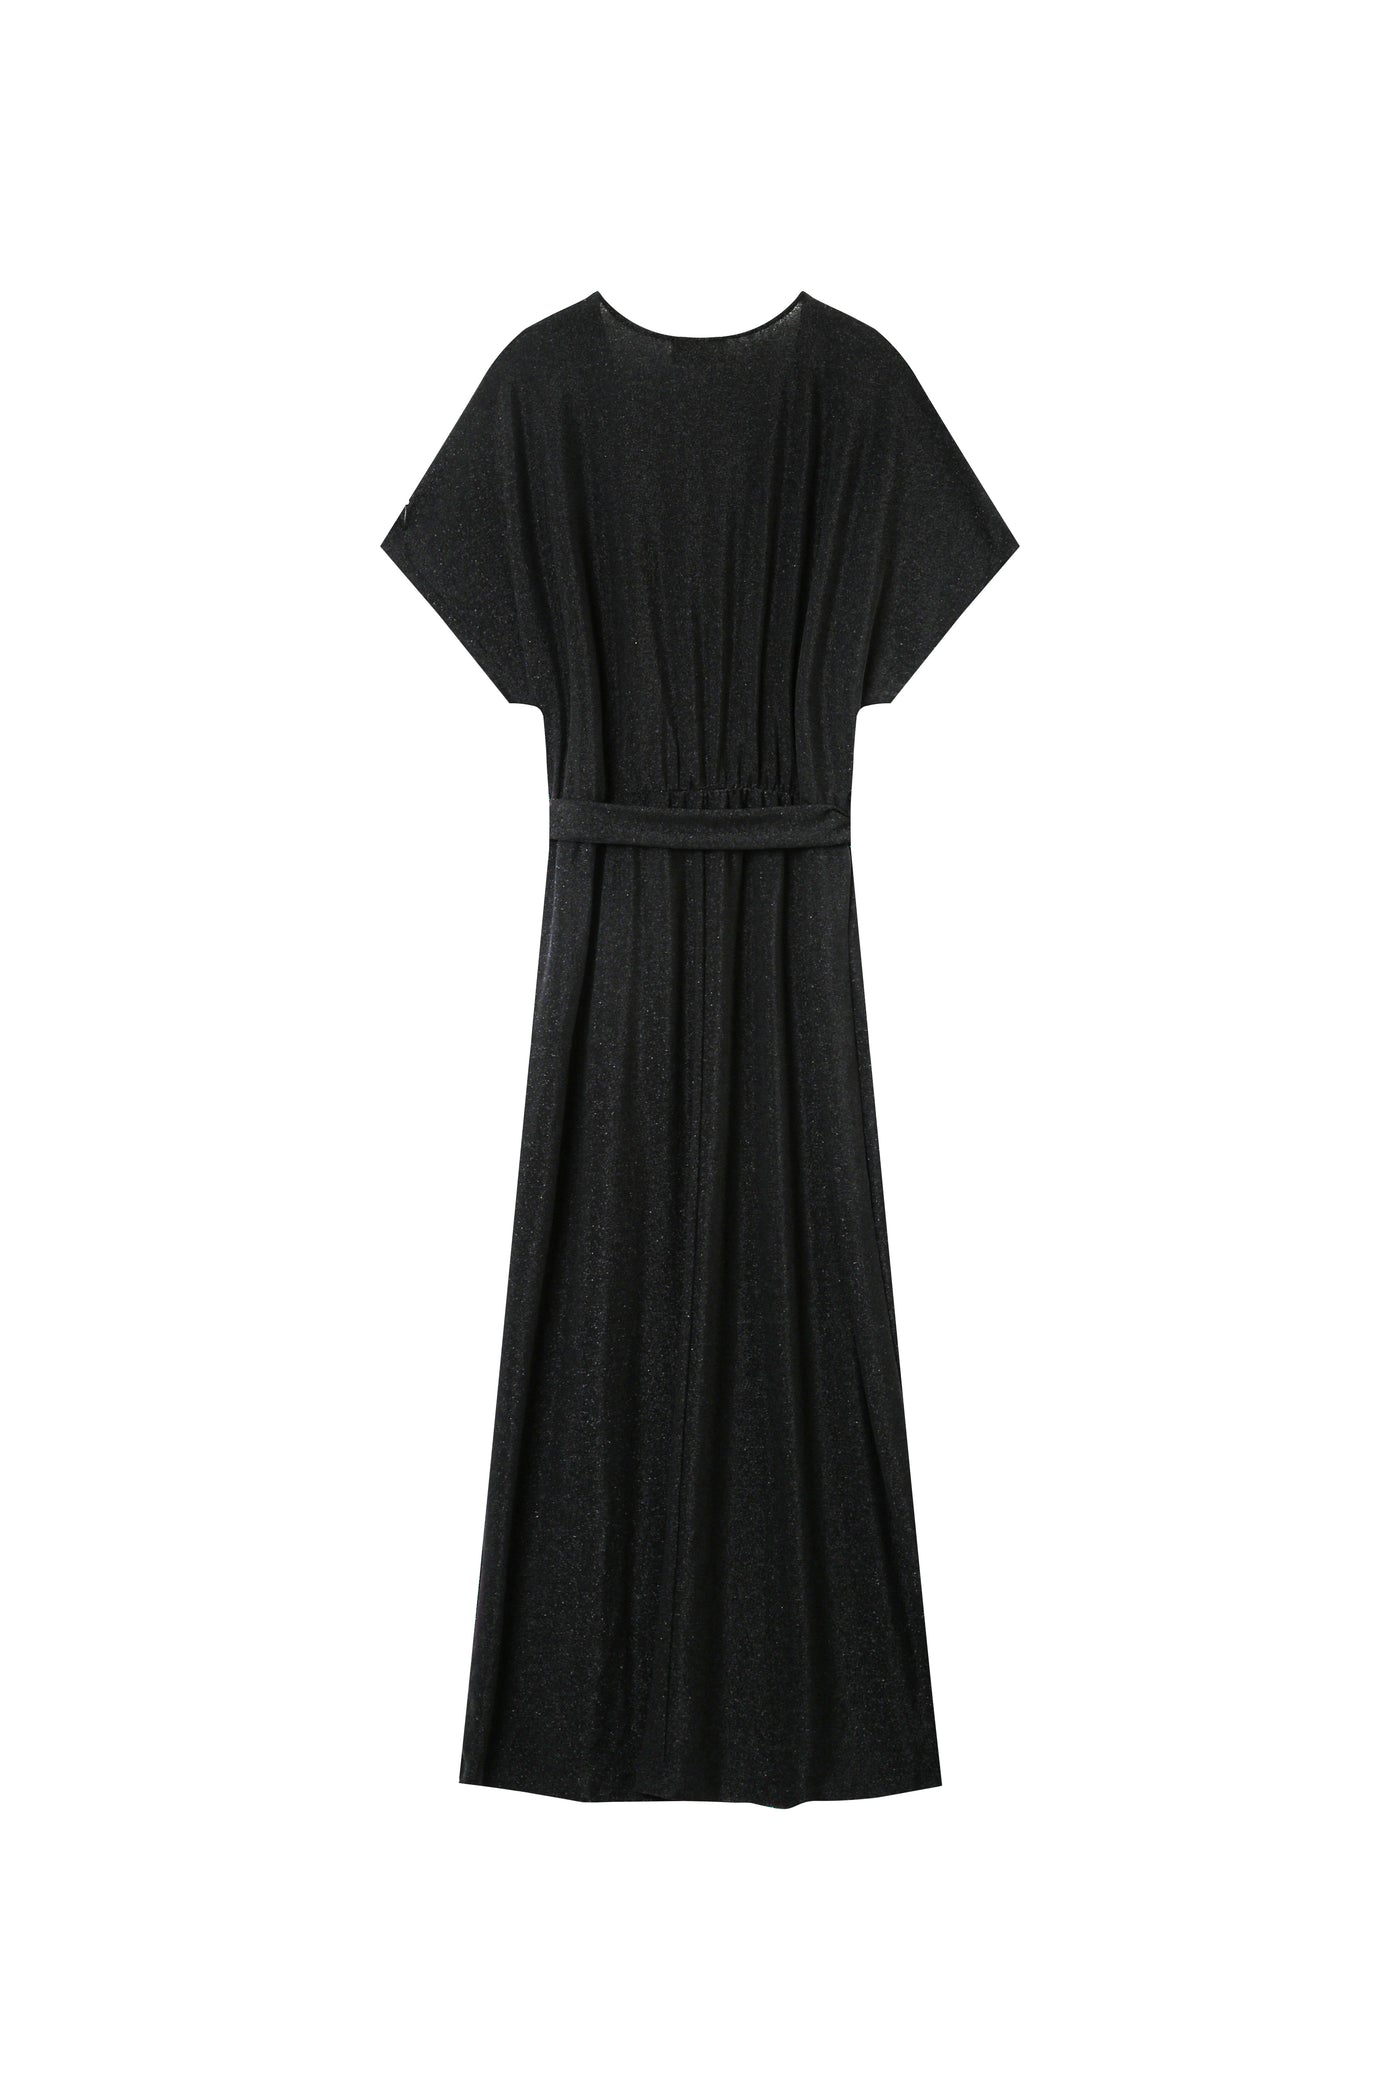 Liv dress in black size 10